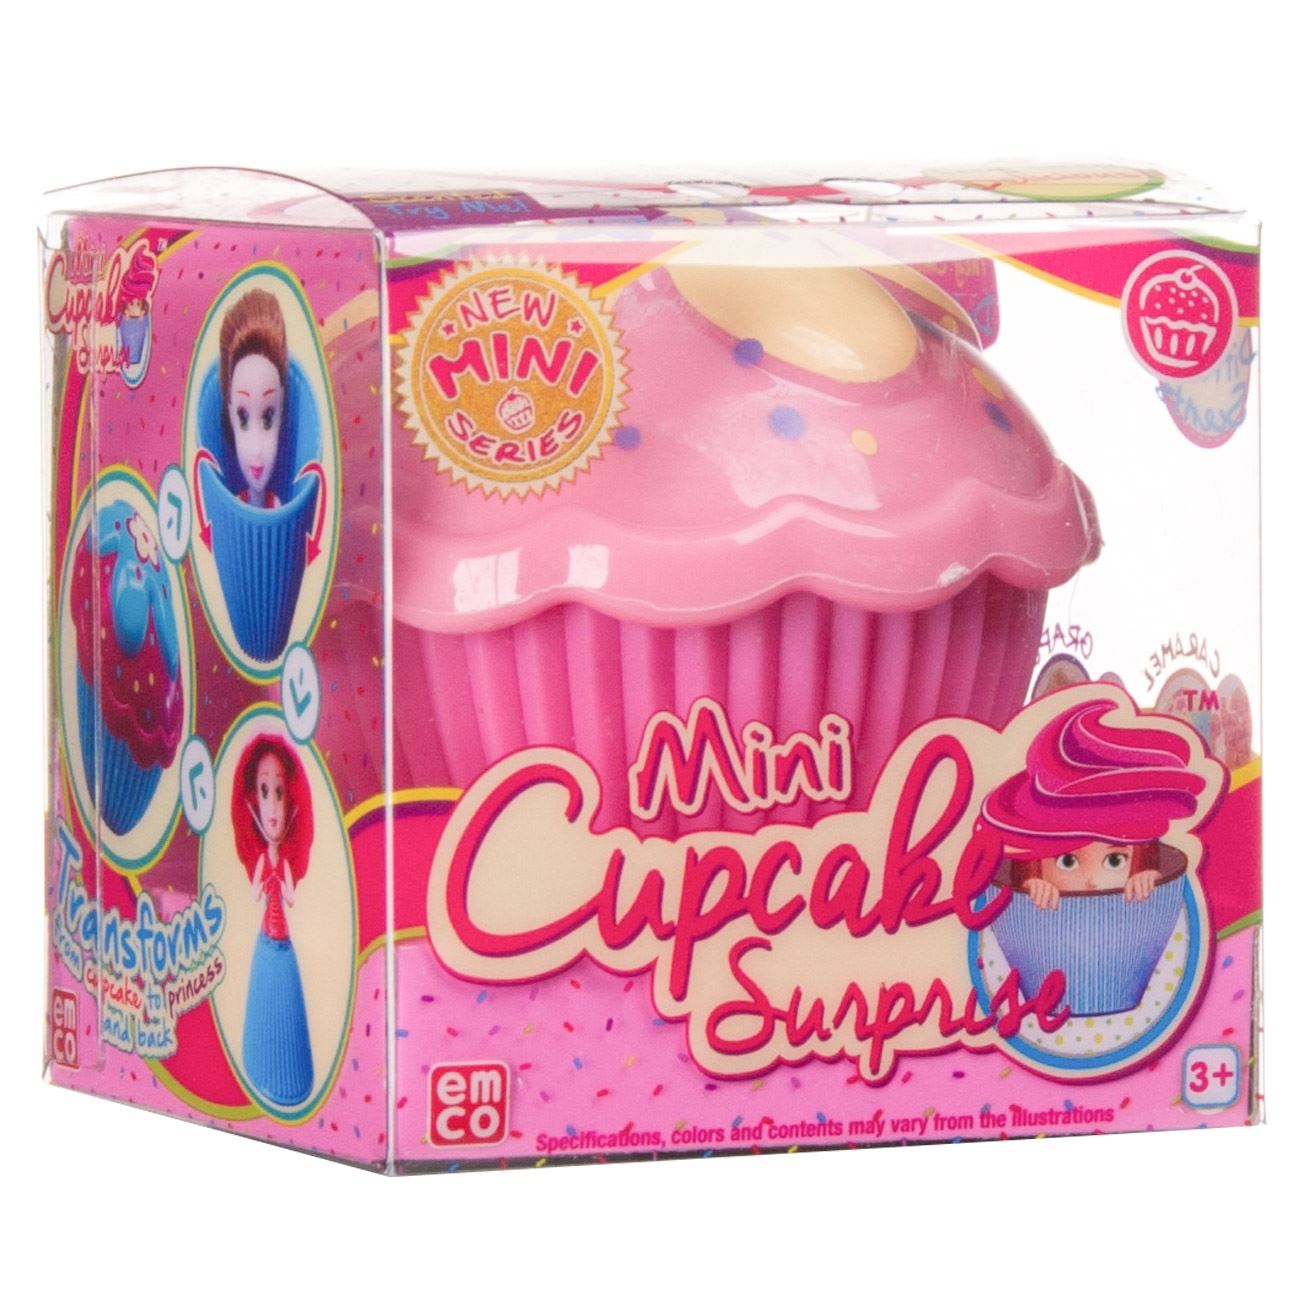   Mini Cupcake  Surprise 